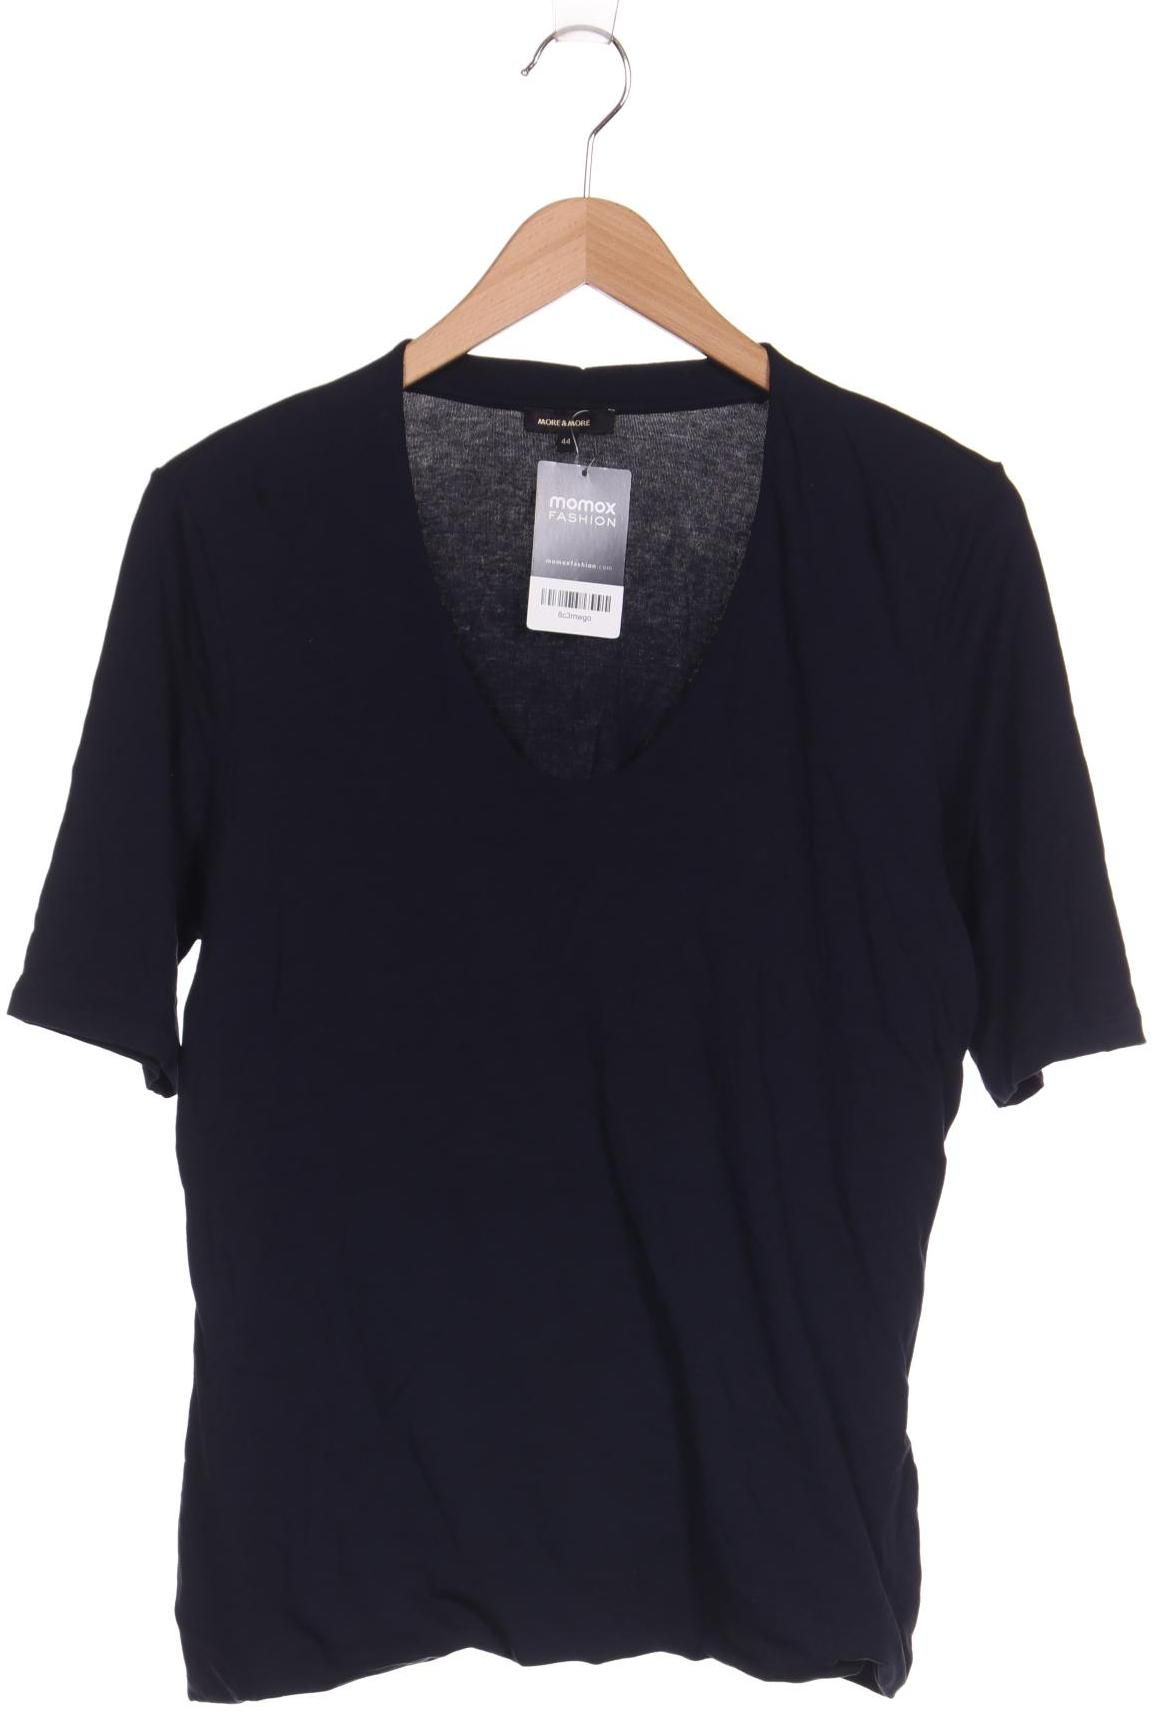 More & More Damen T-Shirt, schwarz von MORE & MORE